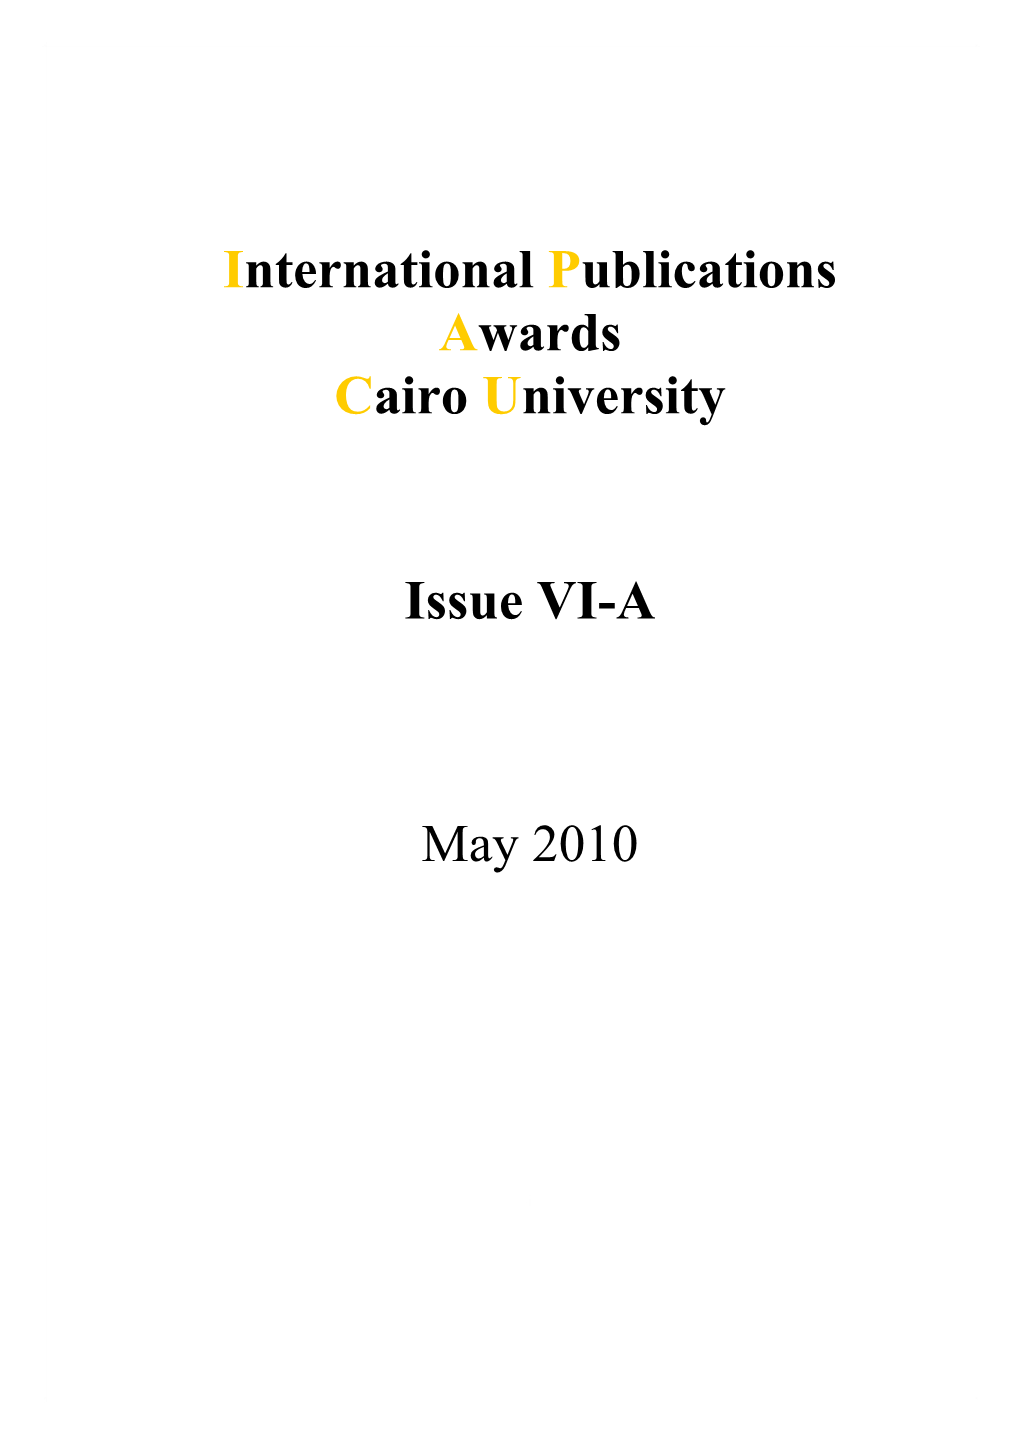 International Publications Awards Cairo University Issue VI-A